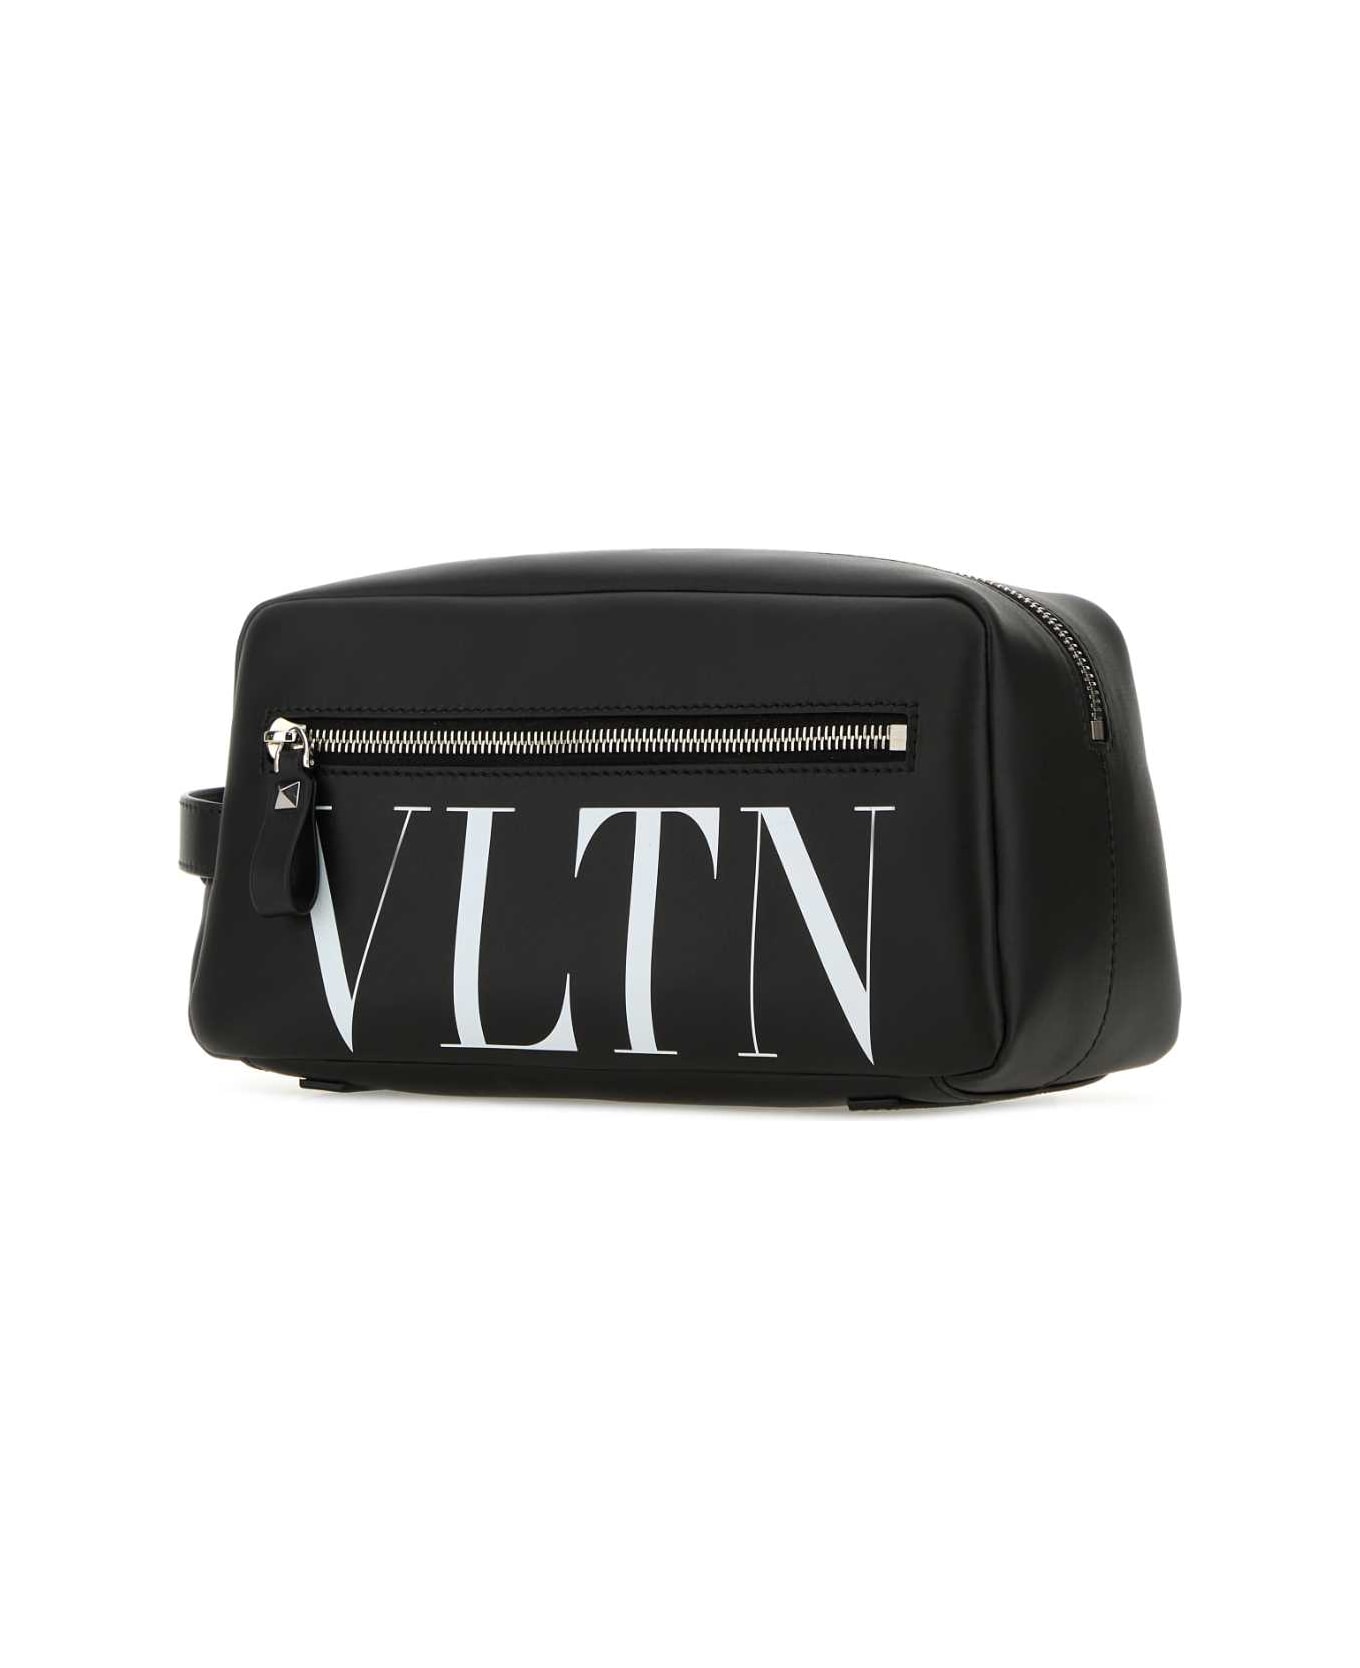 Valentino Garavani Black Leather Vltn Beauty Case - NEROBIANCO